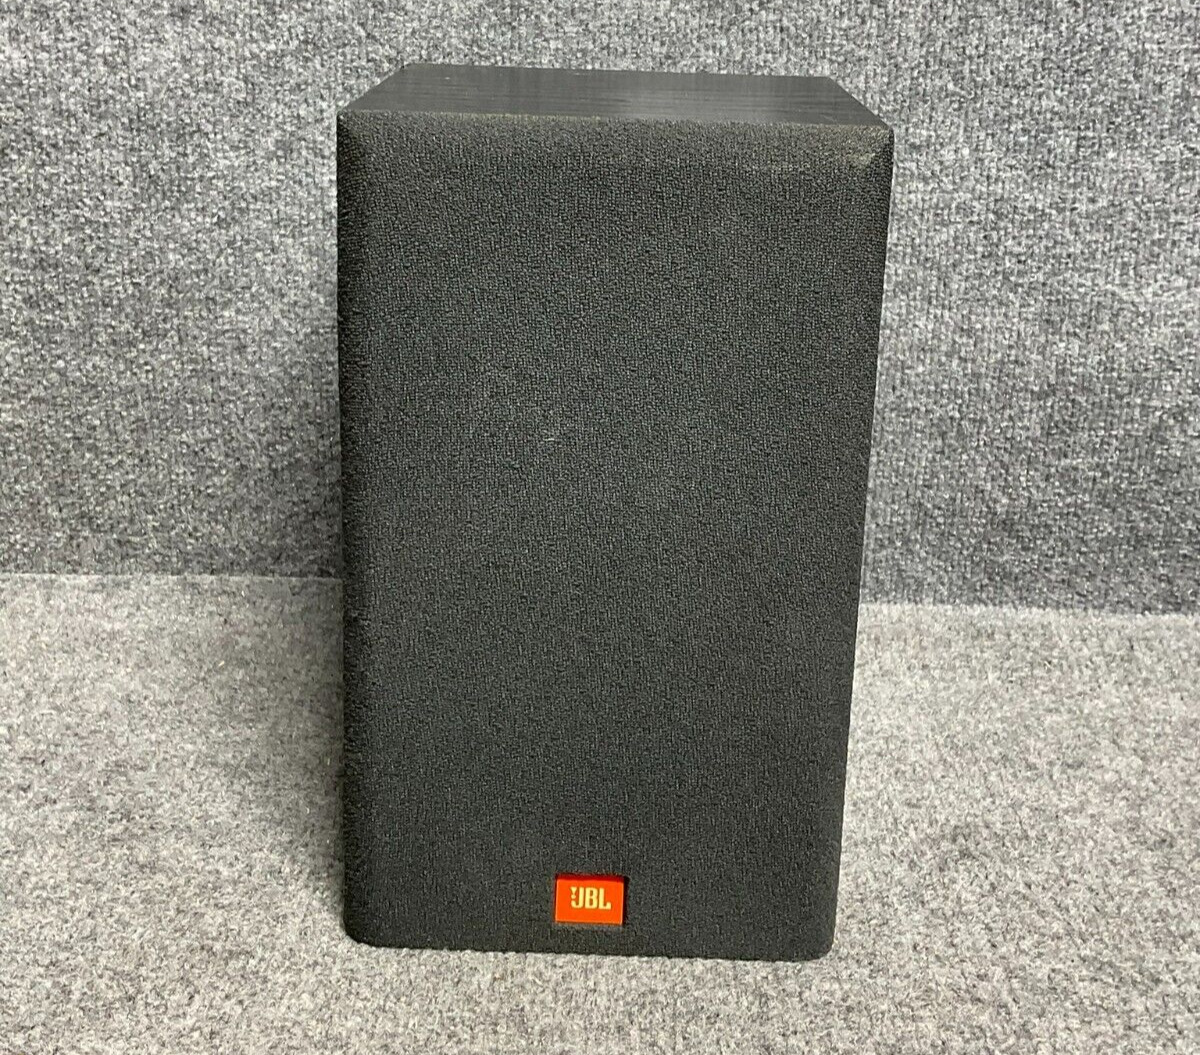 JBL Single Bookshelf Speaker ARC10, Impedance 8 Ohms In Black Color